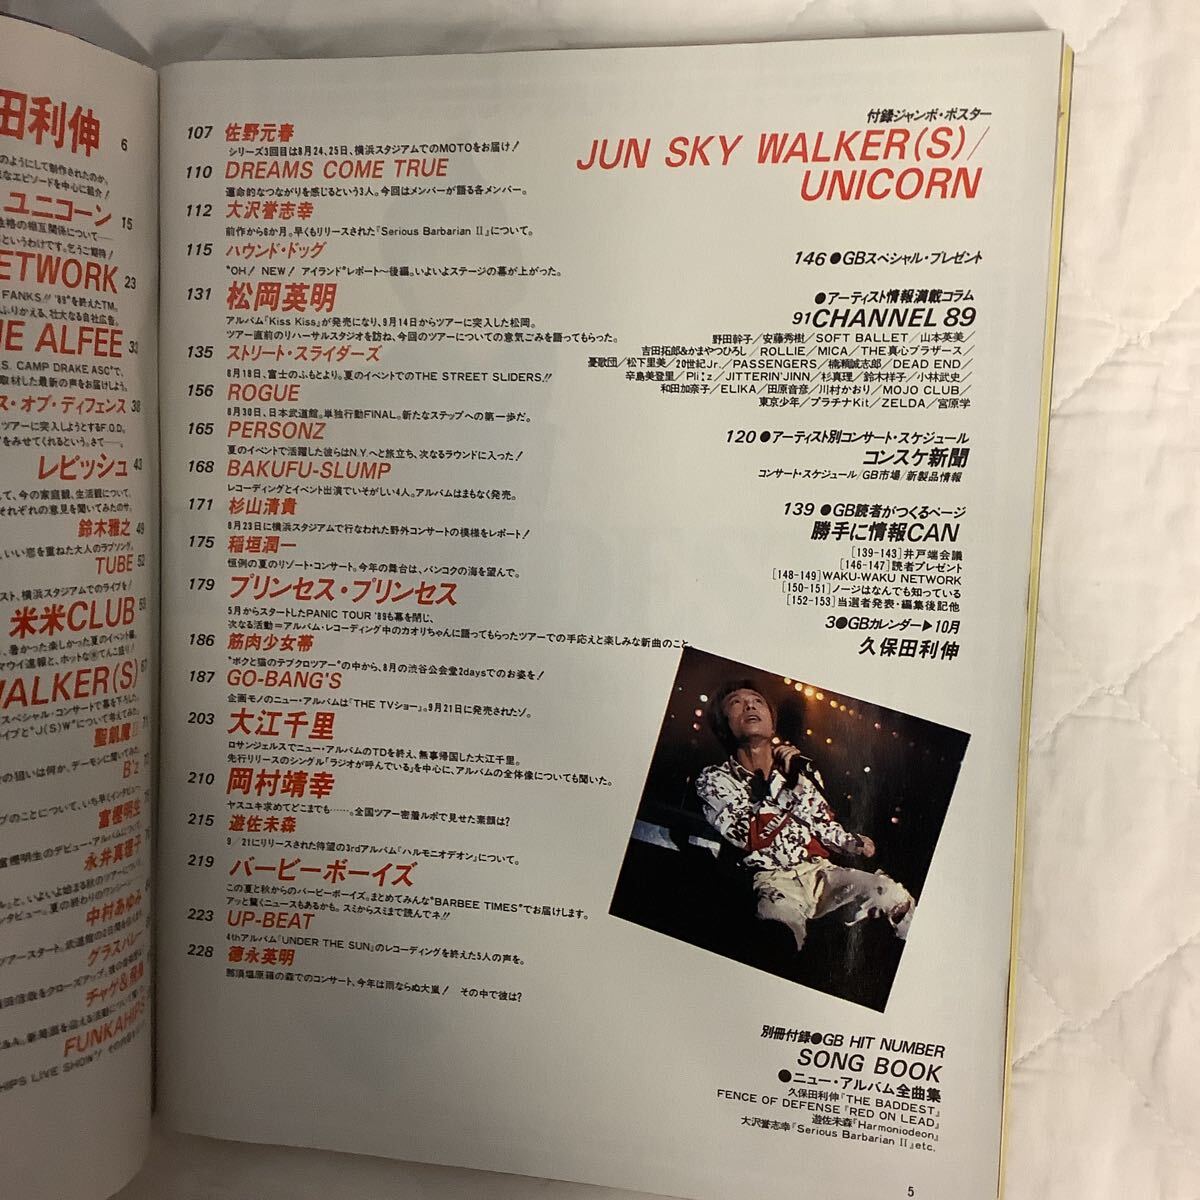 GB 1989 год 11 месяц номер Kubota Toshinobu обложка дополнение в наличии (J(S)W UNICORN jumbo постер / Yusa Mimori обложка SONG BOOK)